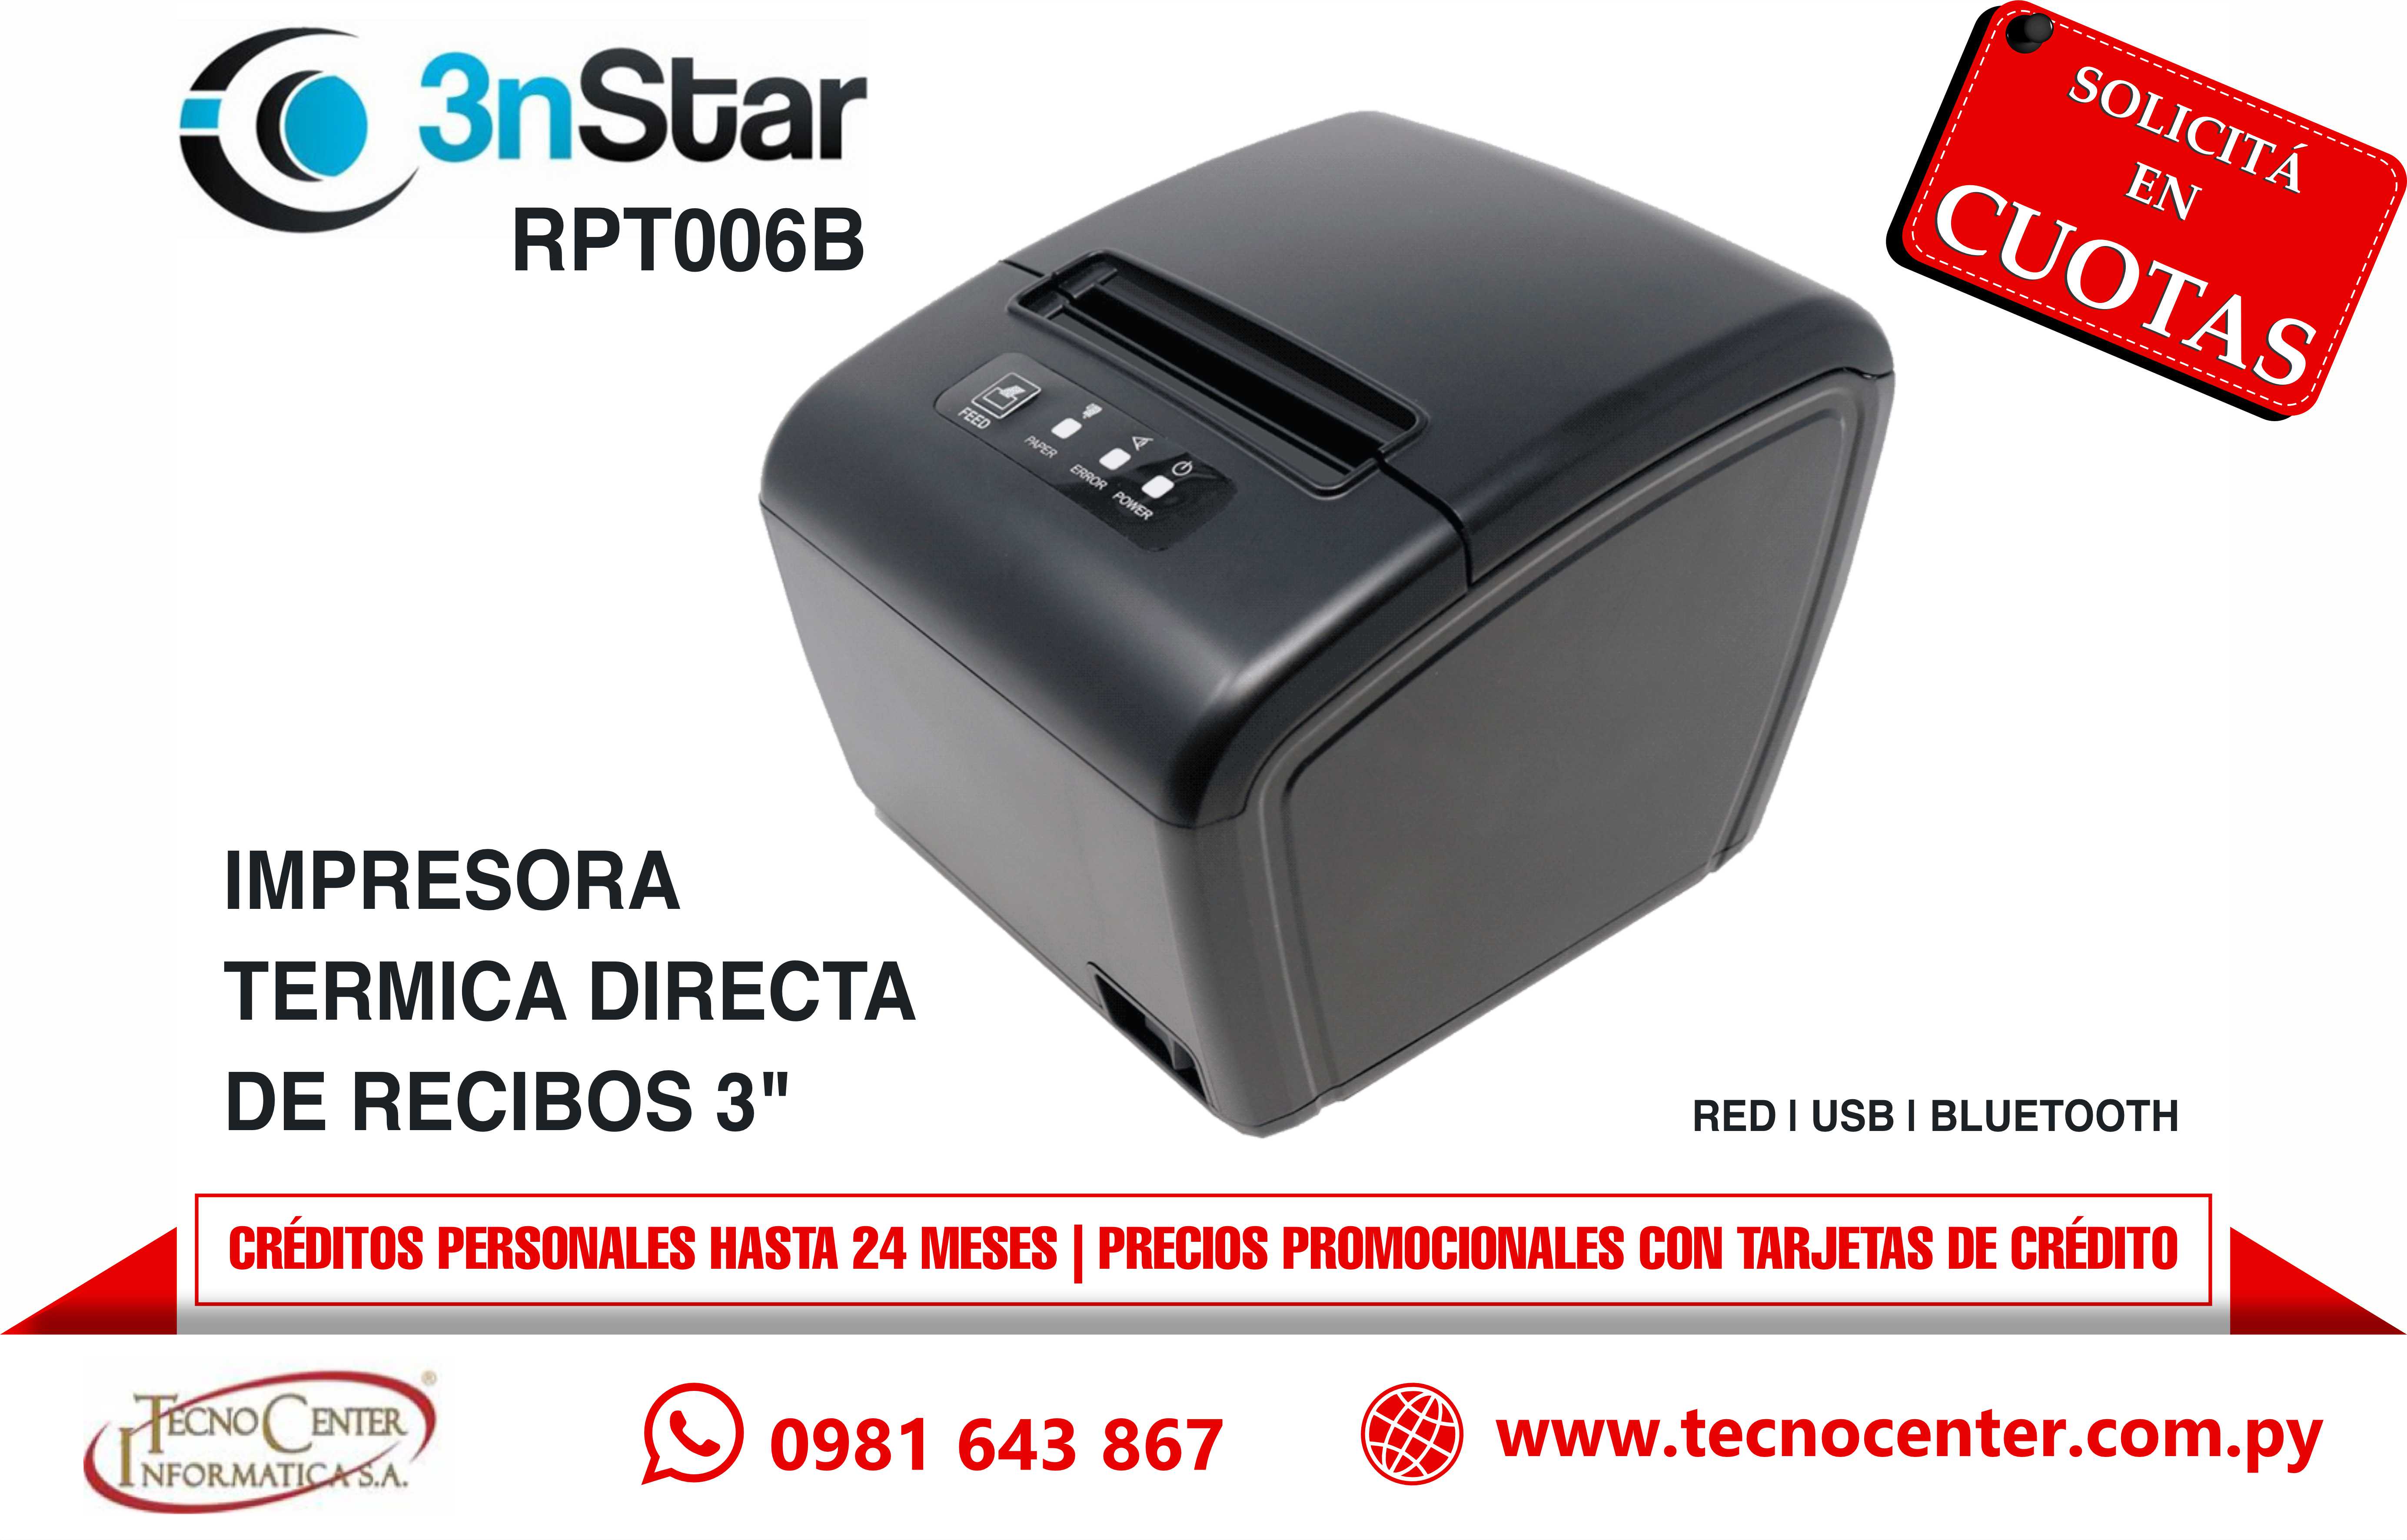 Impresora Termica Directa 3nStar RPT006B